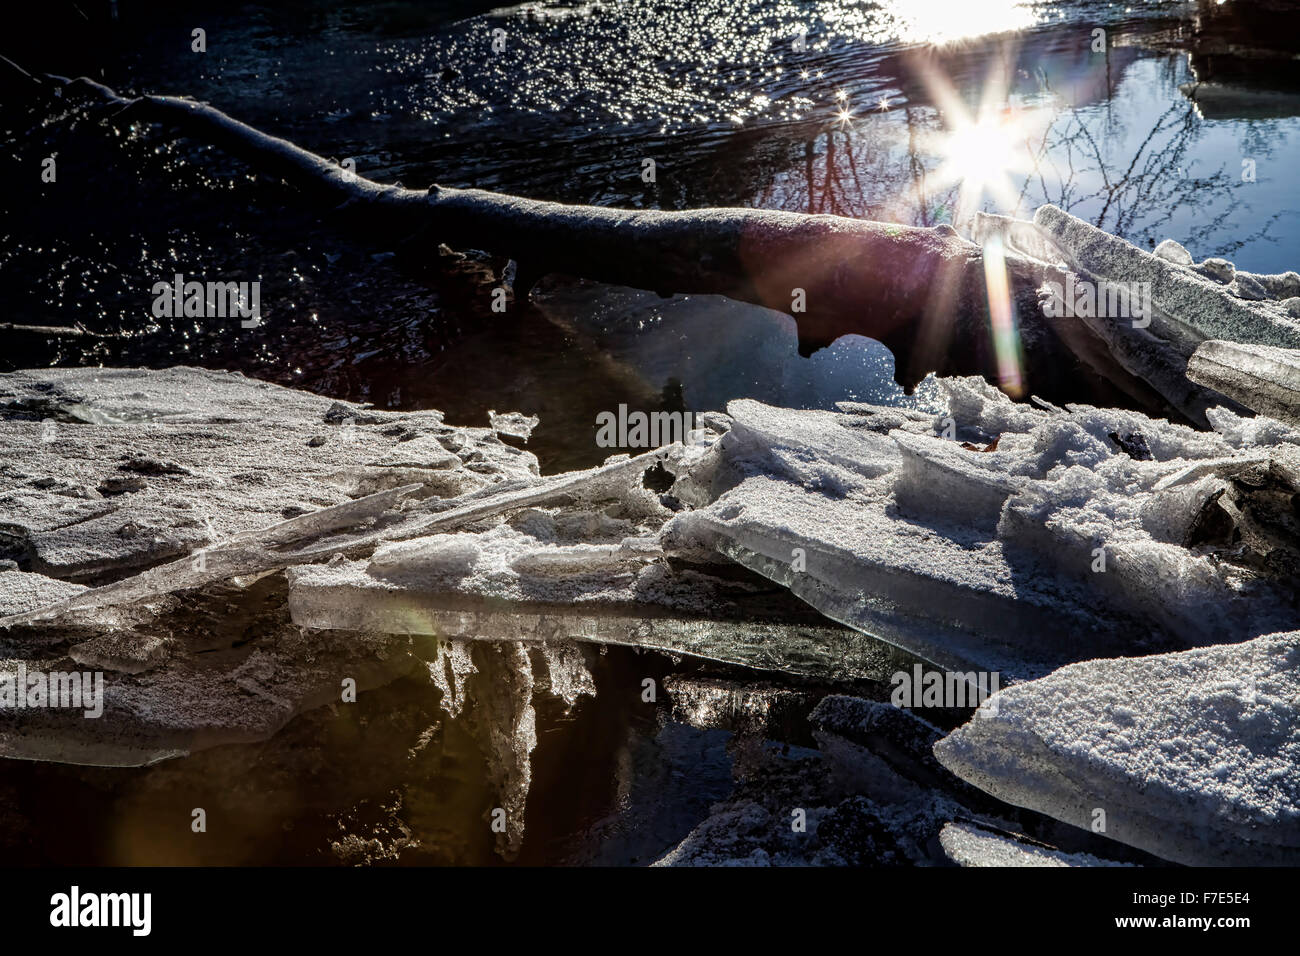 Small magical winter scene near a river with glittering ice. Stock Photo